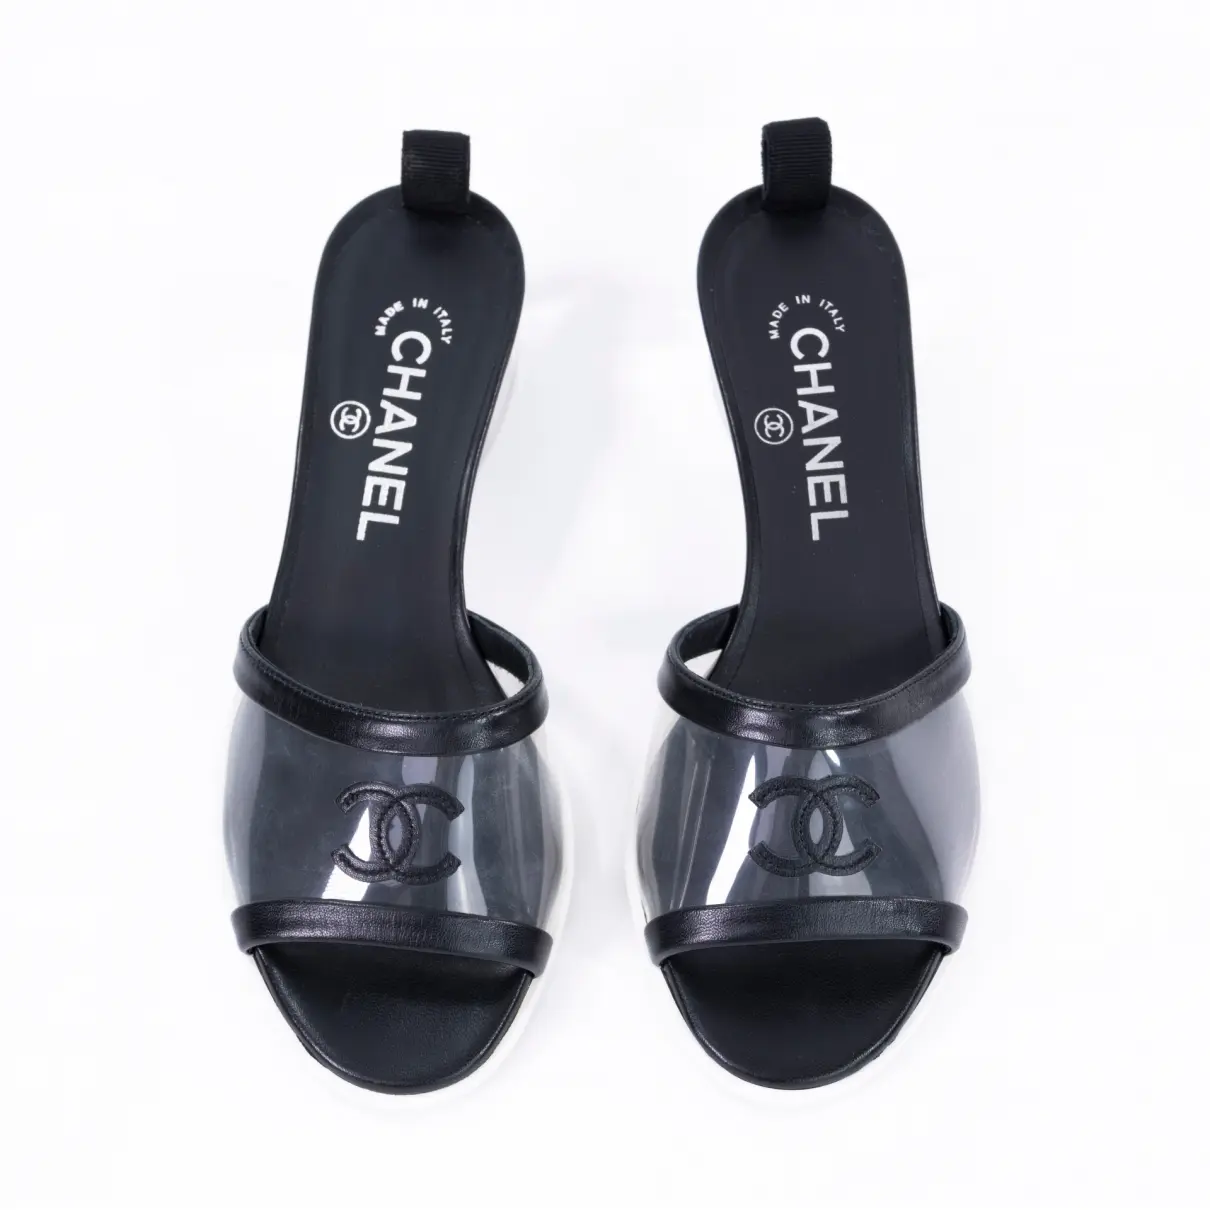 Buy Chanel Black Plastic Sandals online